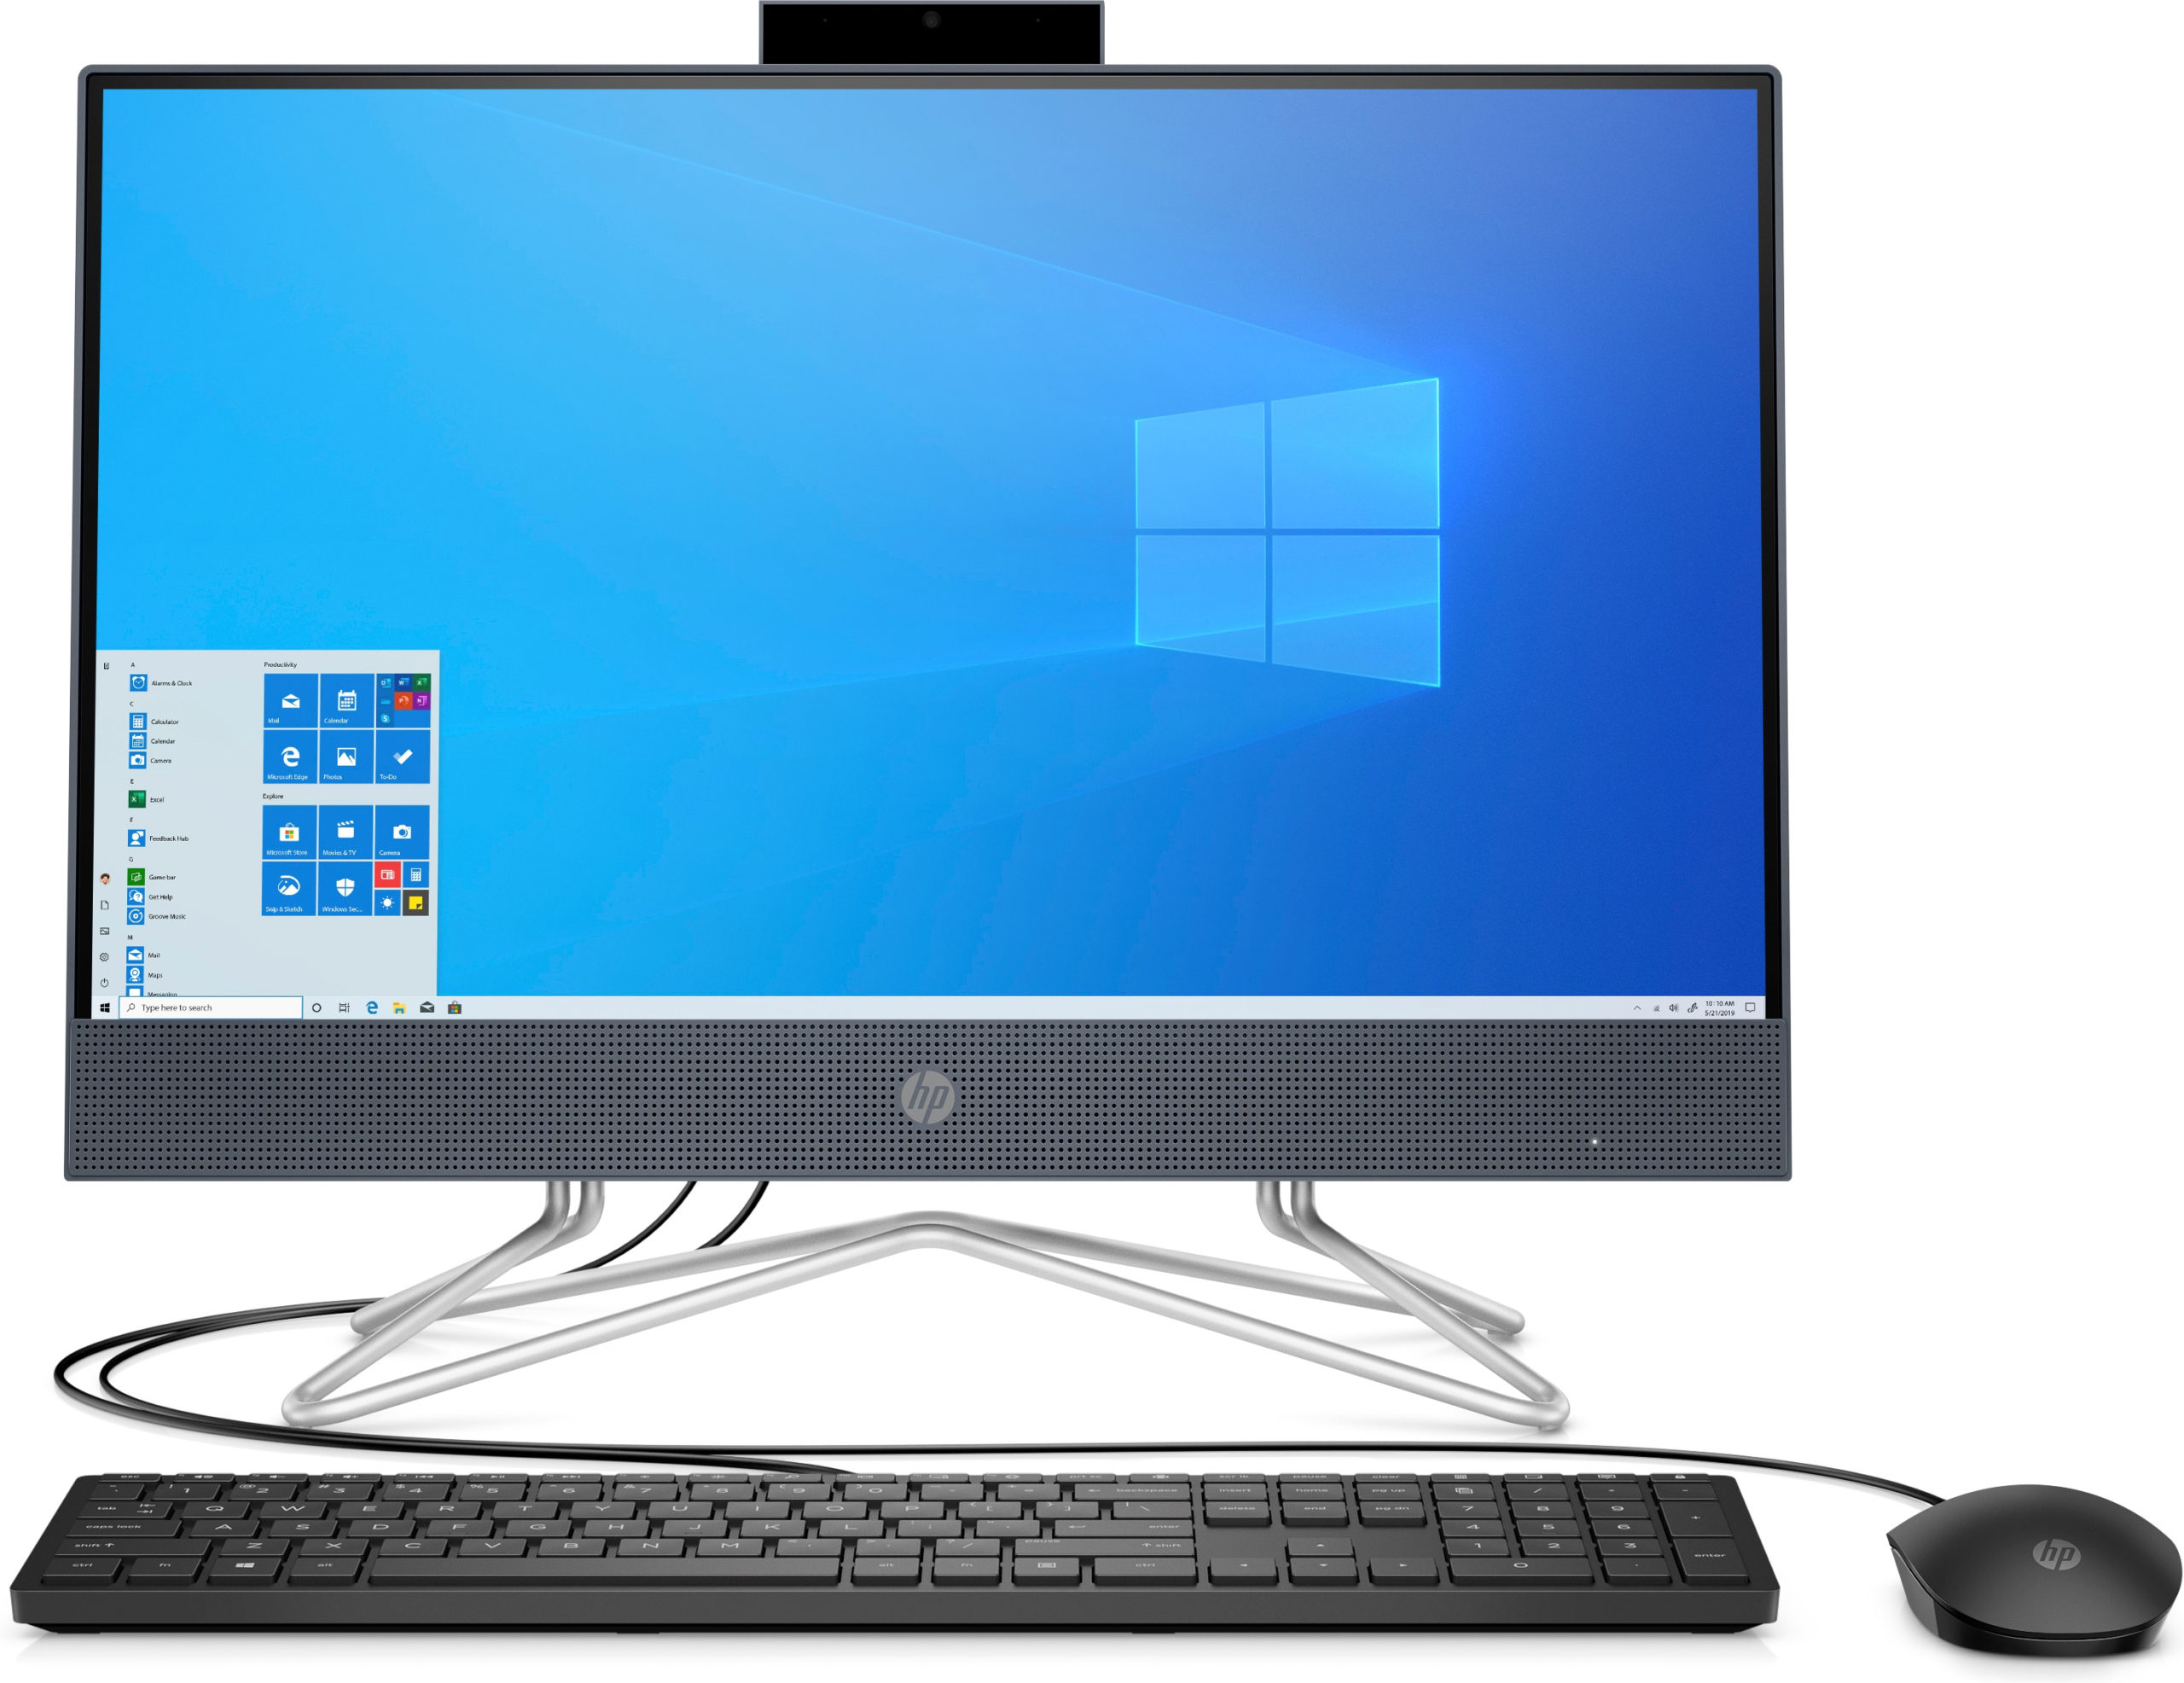 HP All-in-One Desktop Computer 21.5 FHD Screen/ Intel Celeron G5900T/ 4GB  DDR4 RAM/ 256GB SSD/DVD-Writer/AC WiFi/HDMI/Bluetooth/Blue/Windows 10 Home